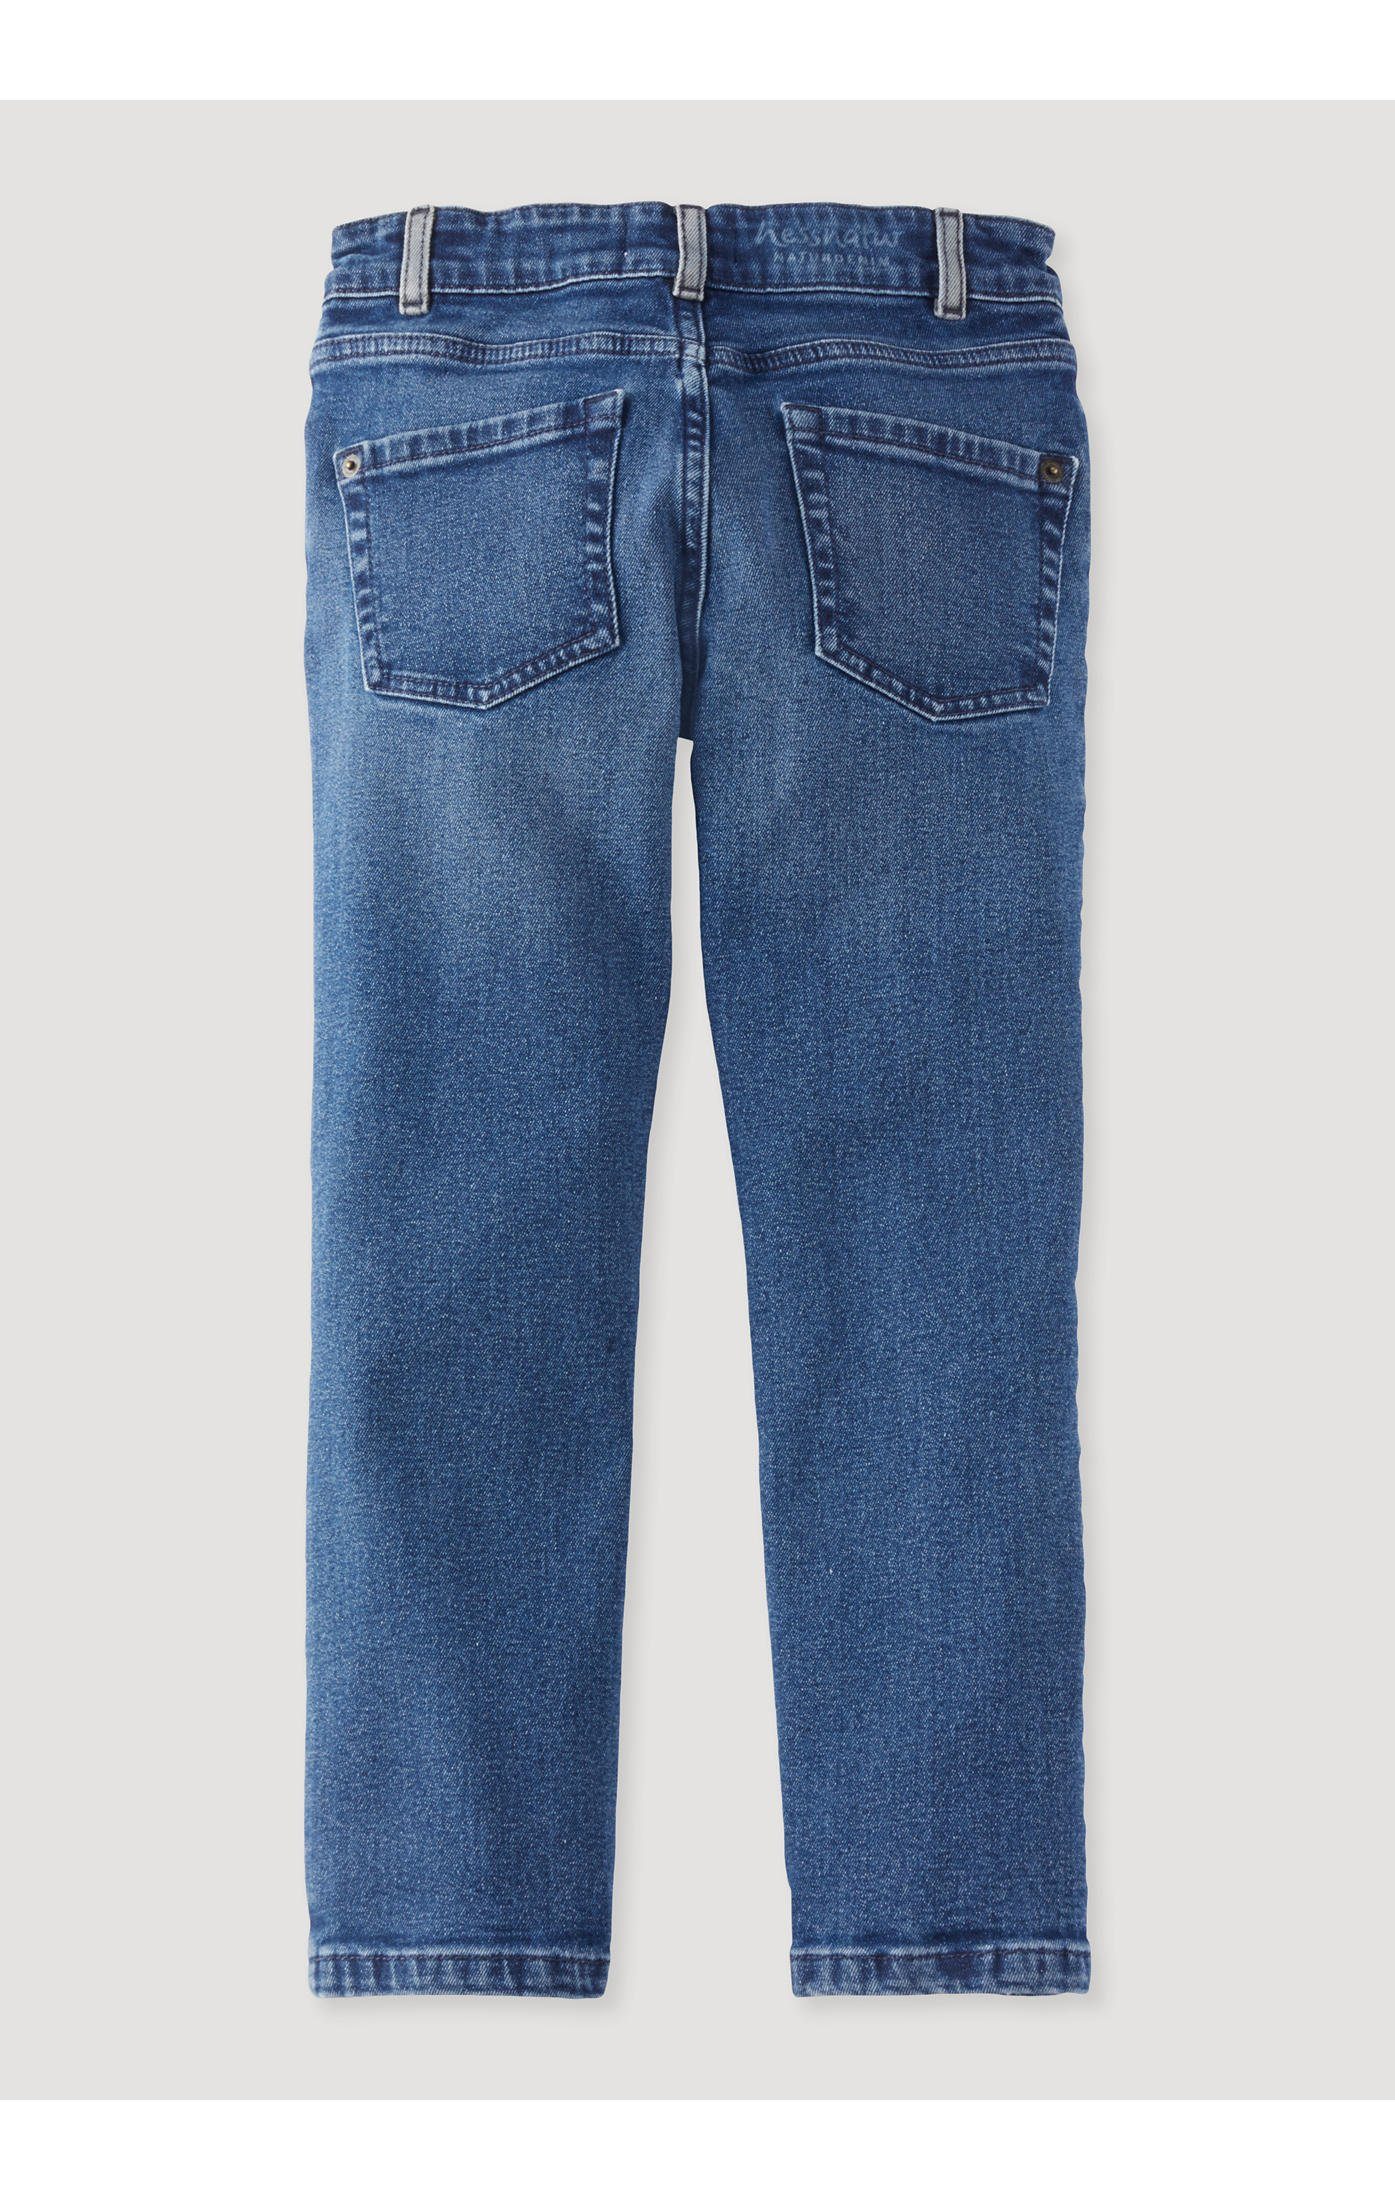 Hessnatur Bequeme Jeans